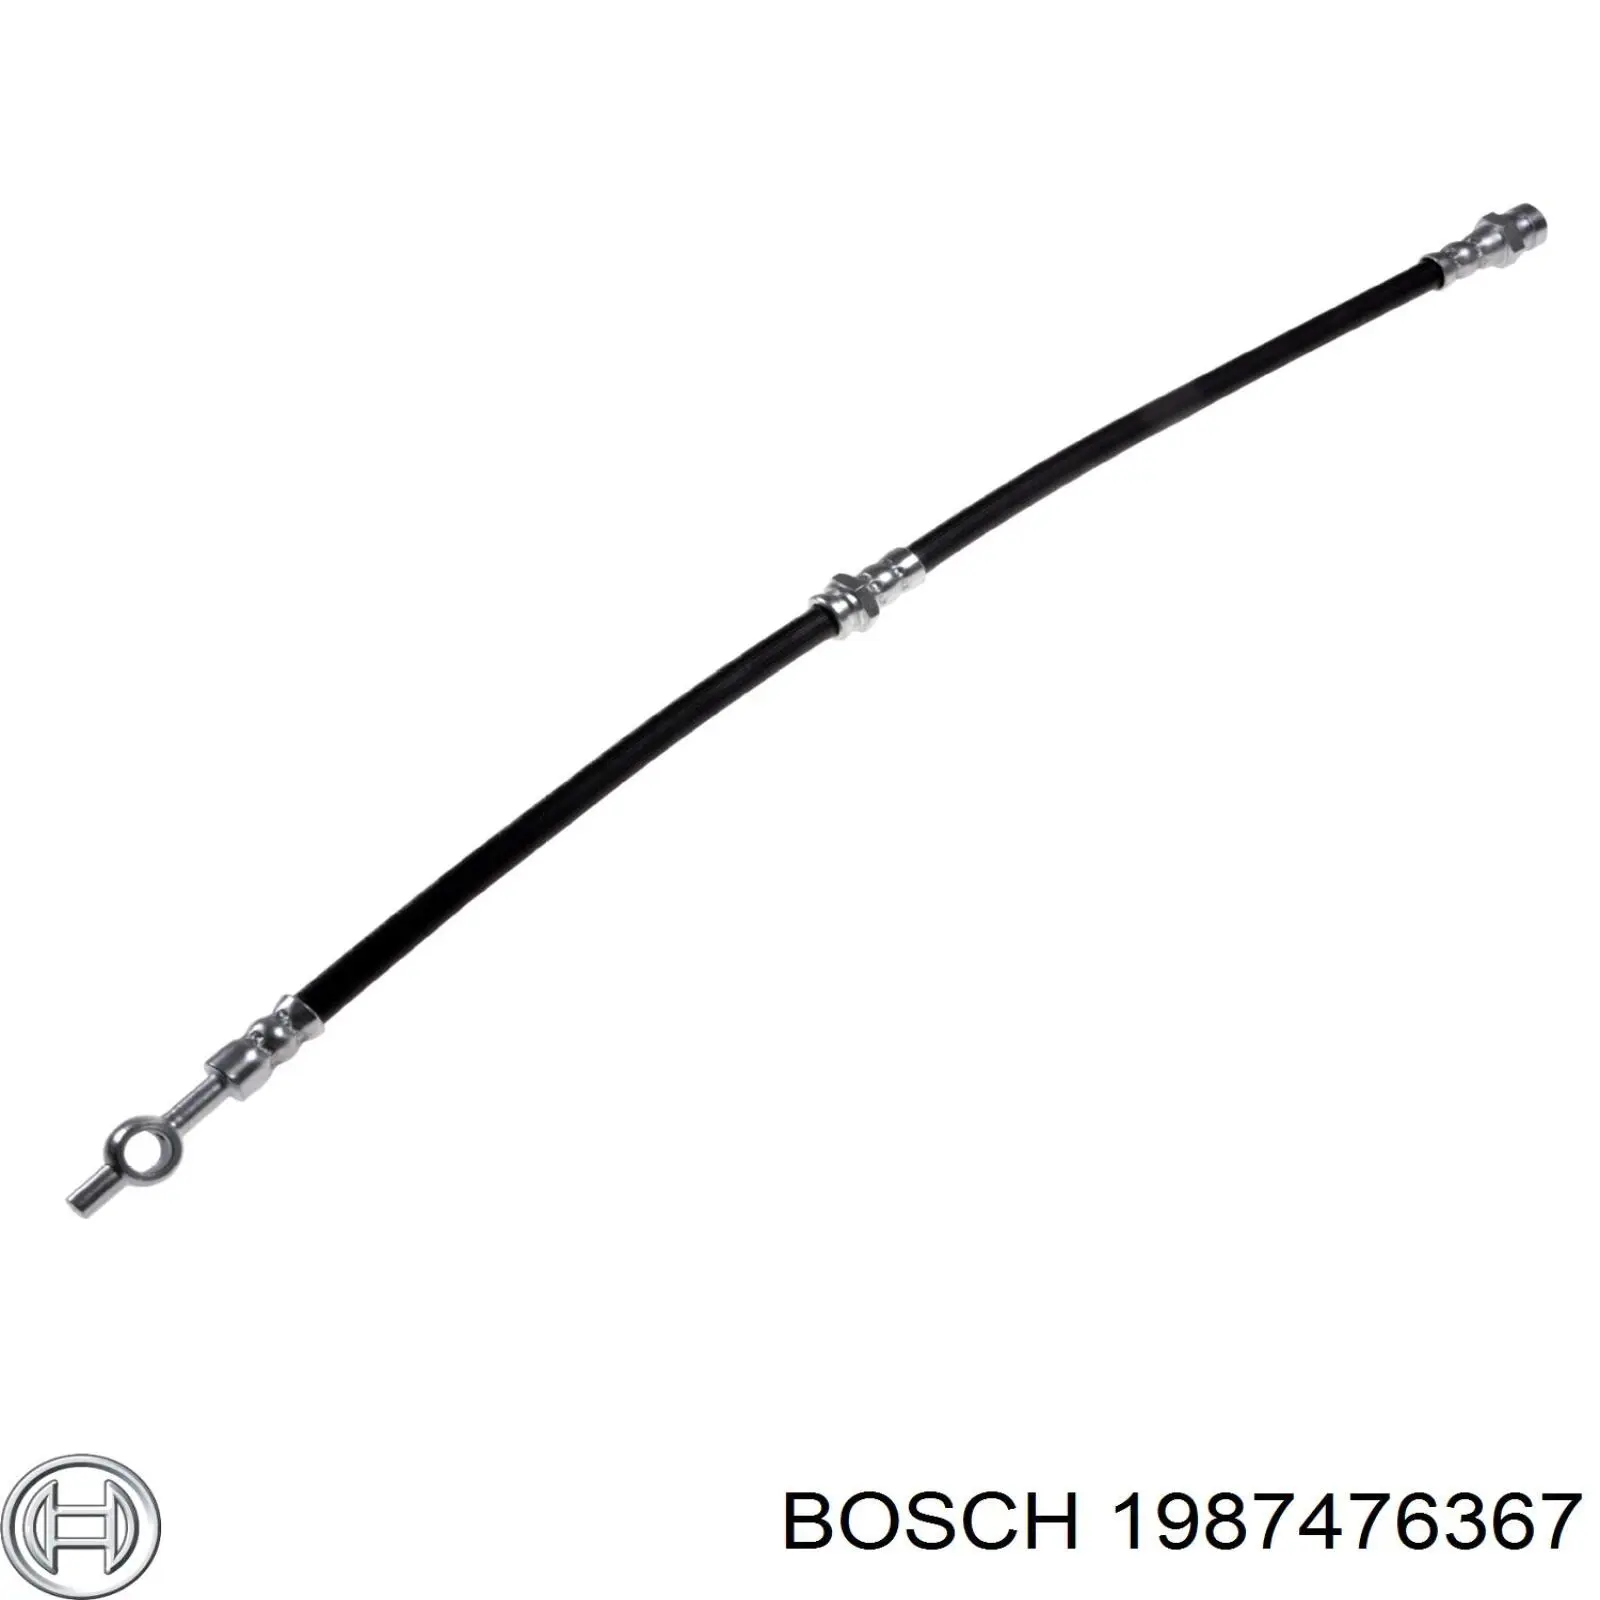 1987476367 Bosch latiguillo de freno trasero izquierdo